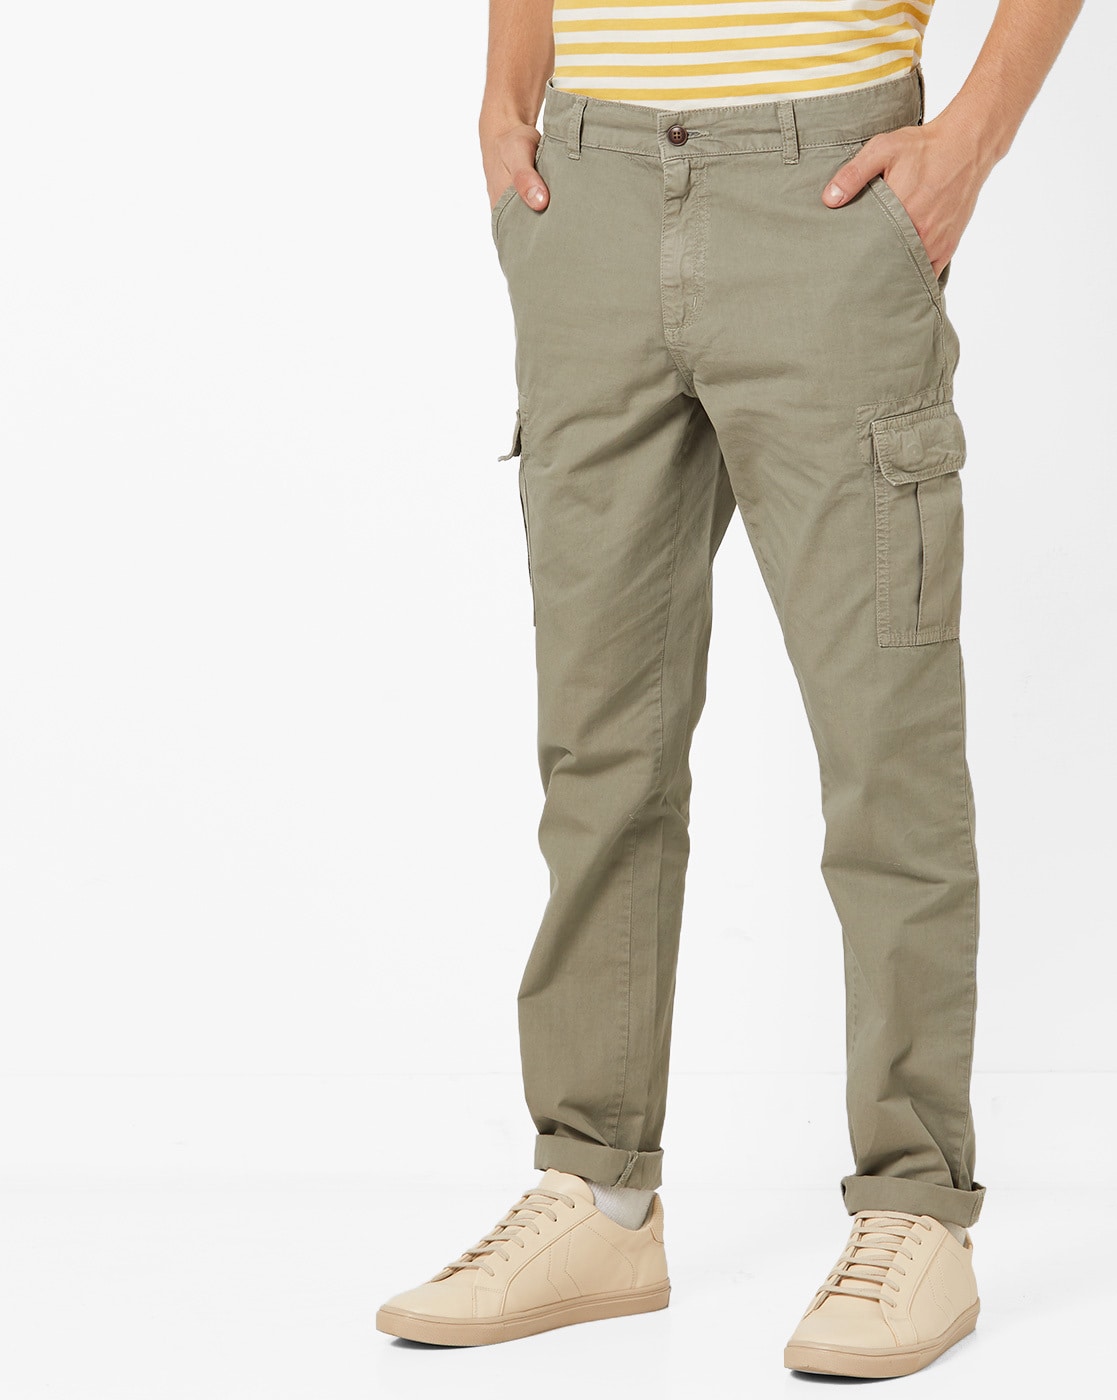 Buy Khaki Trousers & Pants for Men by ALLEN SOLLY Online | Ajio.com